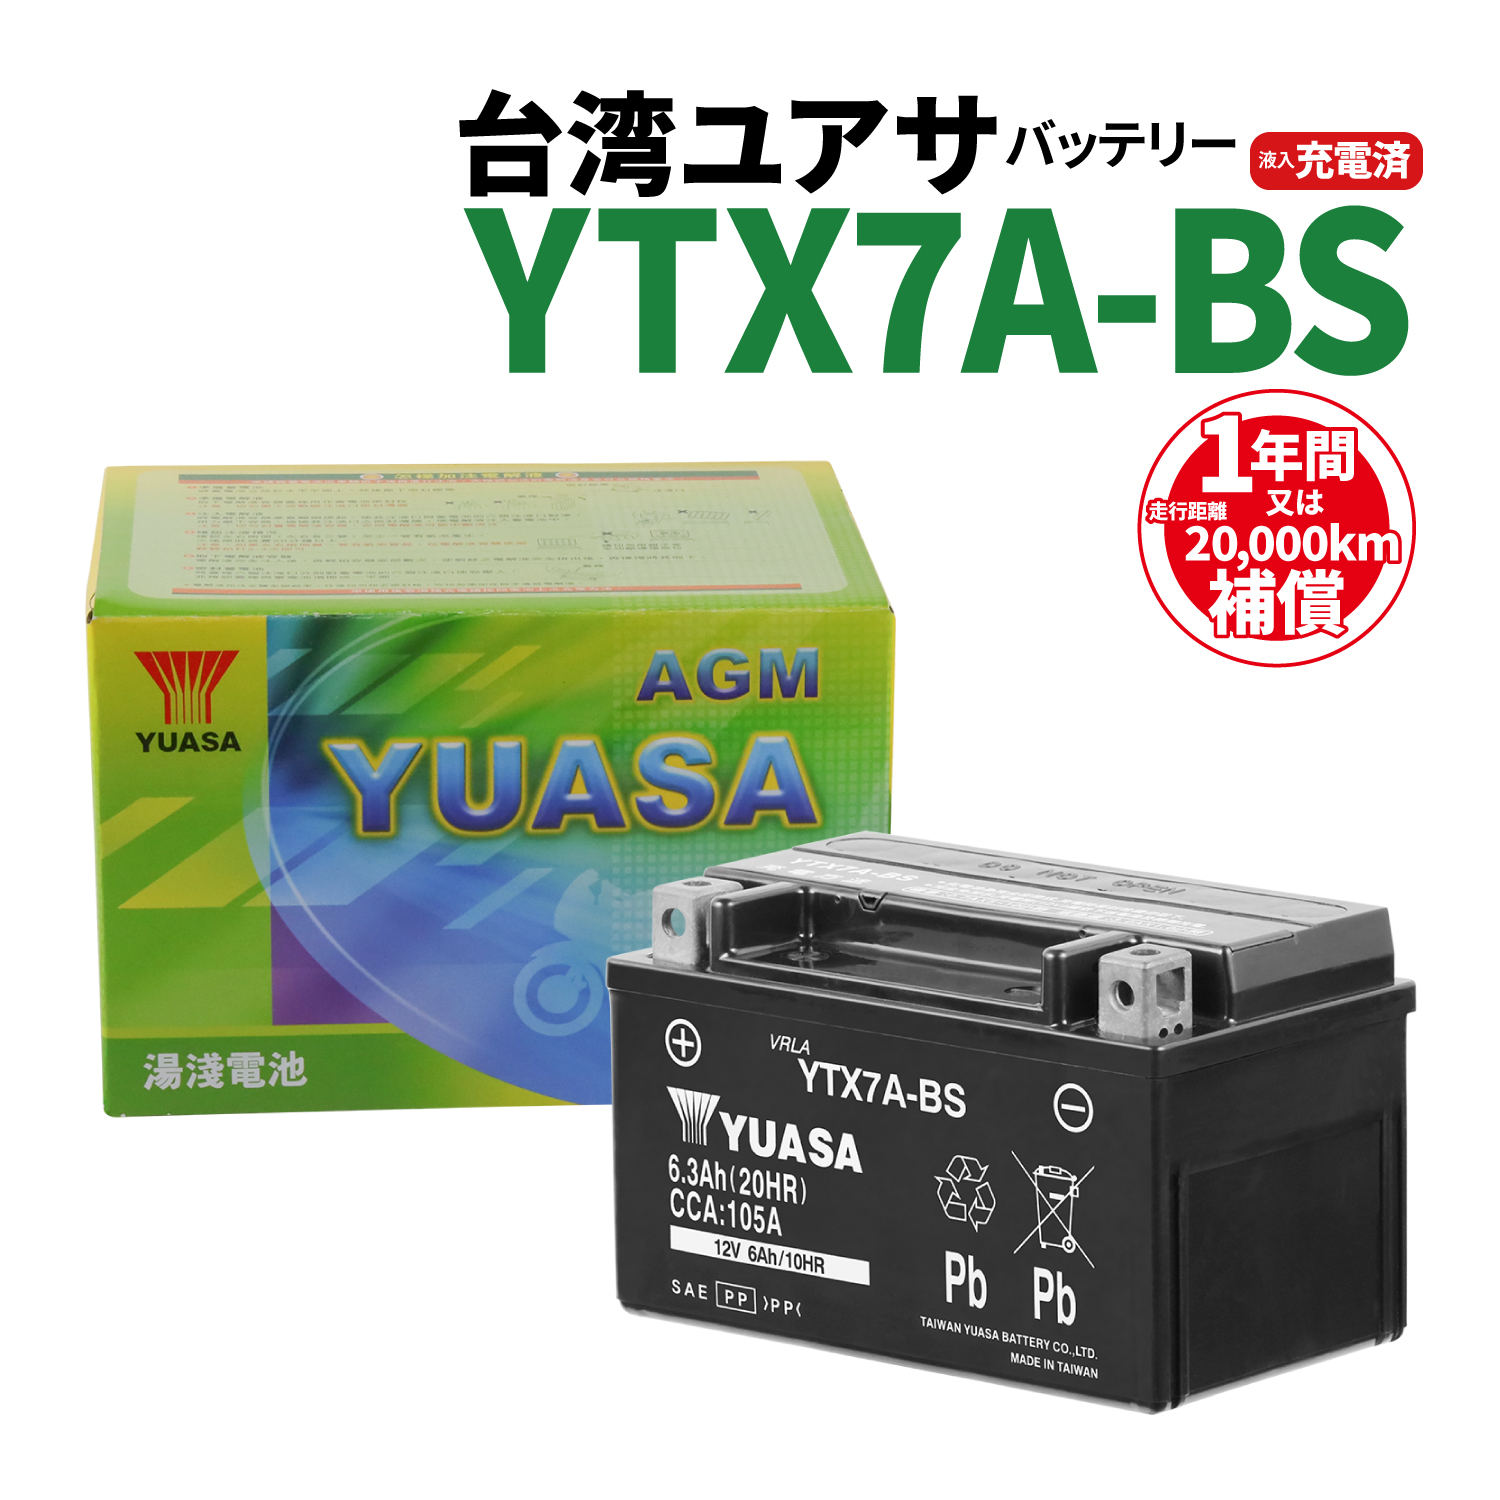  bike battery Taiwan Yuasa fluid entering charge settled YTX7A-BS reach immediately possible to use!1 year guarantee YUASA battery bike parts center 